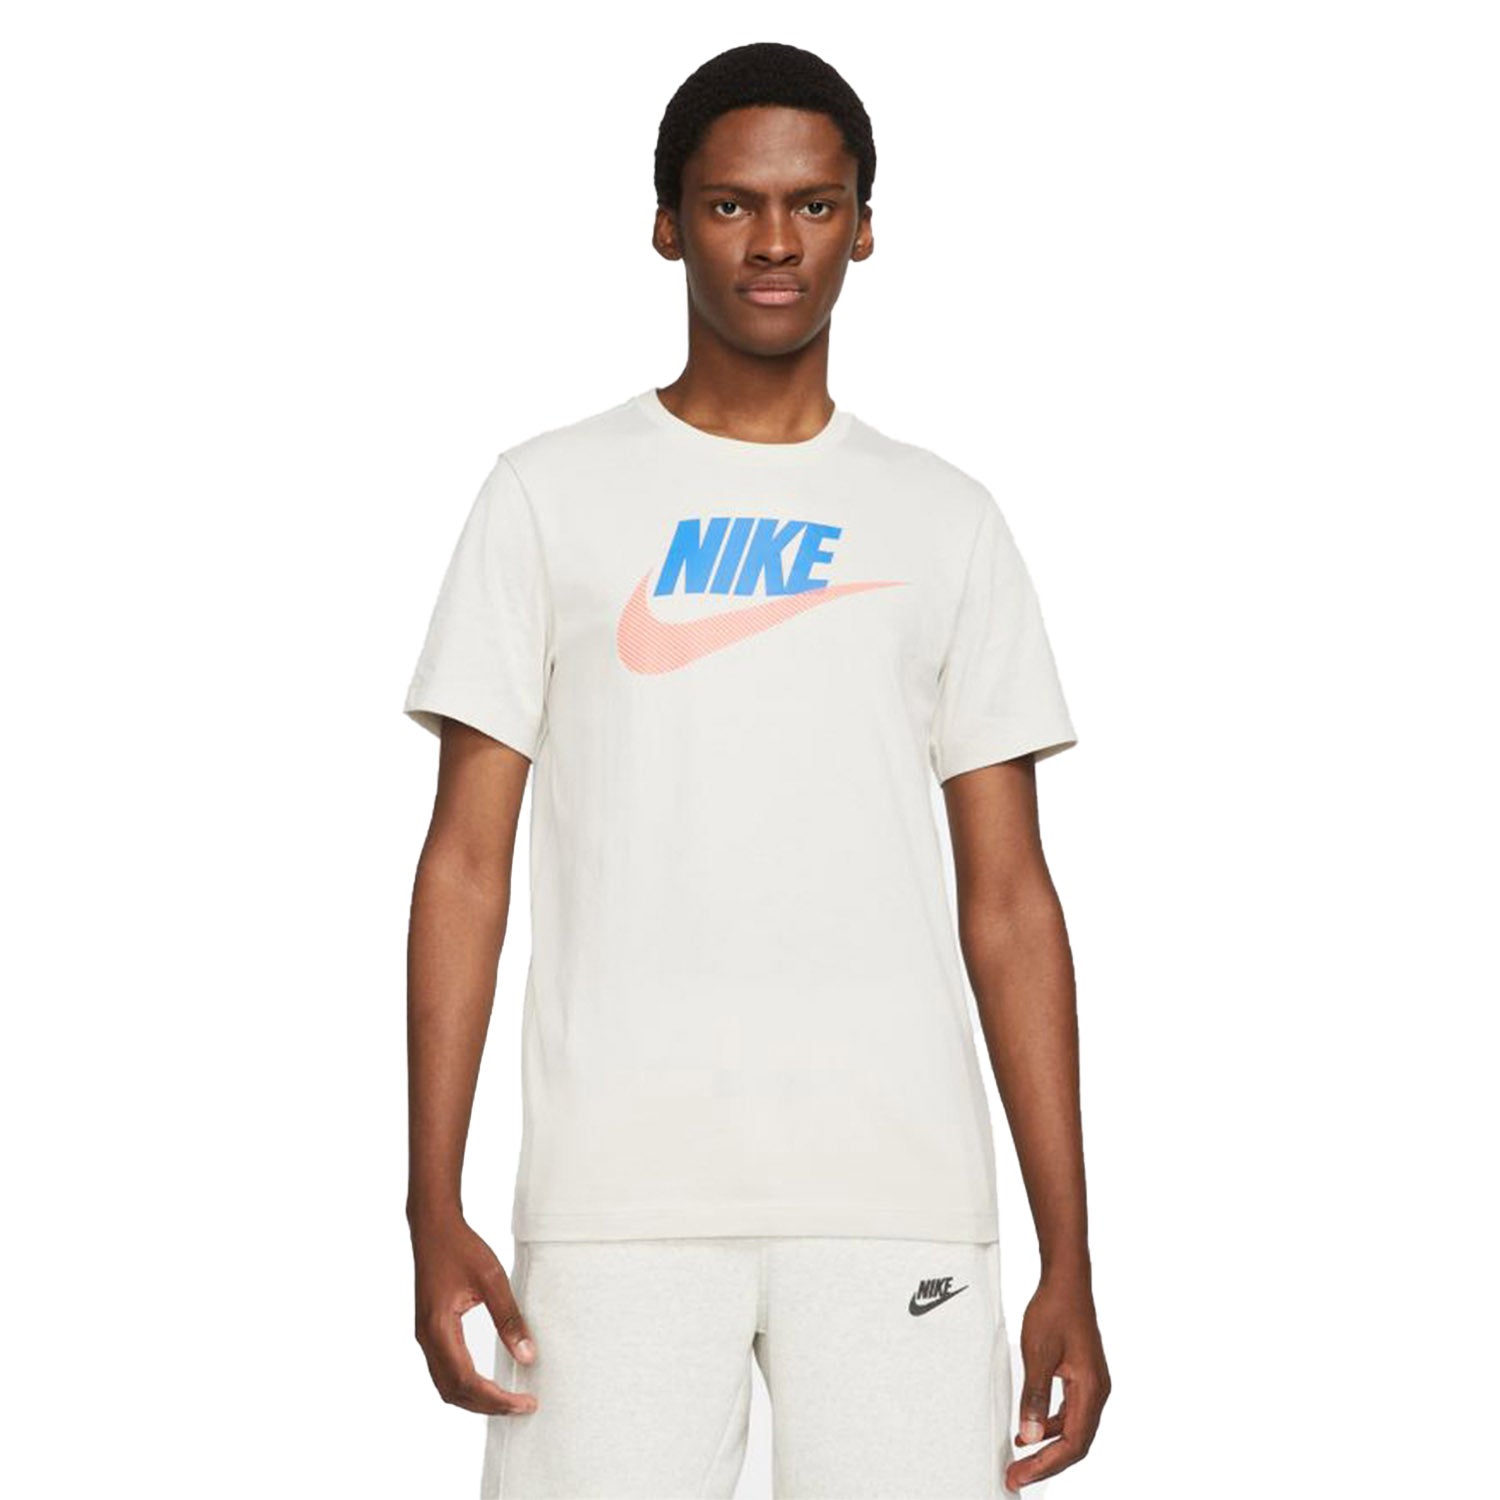 Nike Sportswear T-shir Mens Style : Db6523